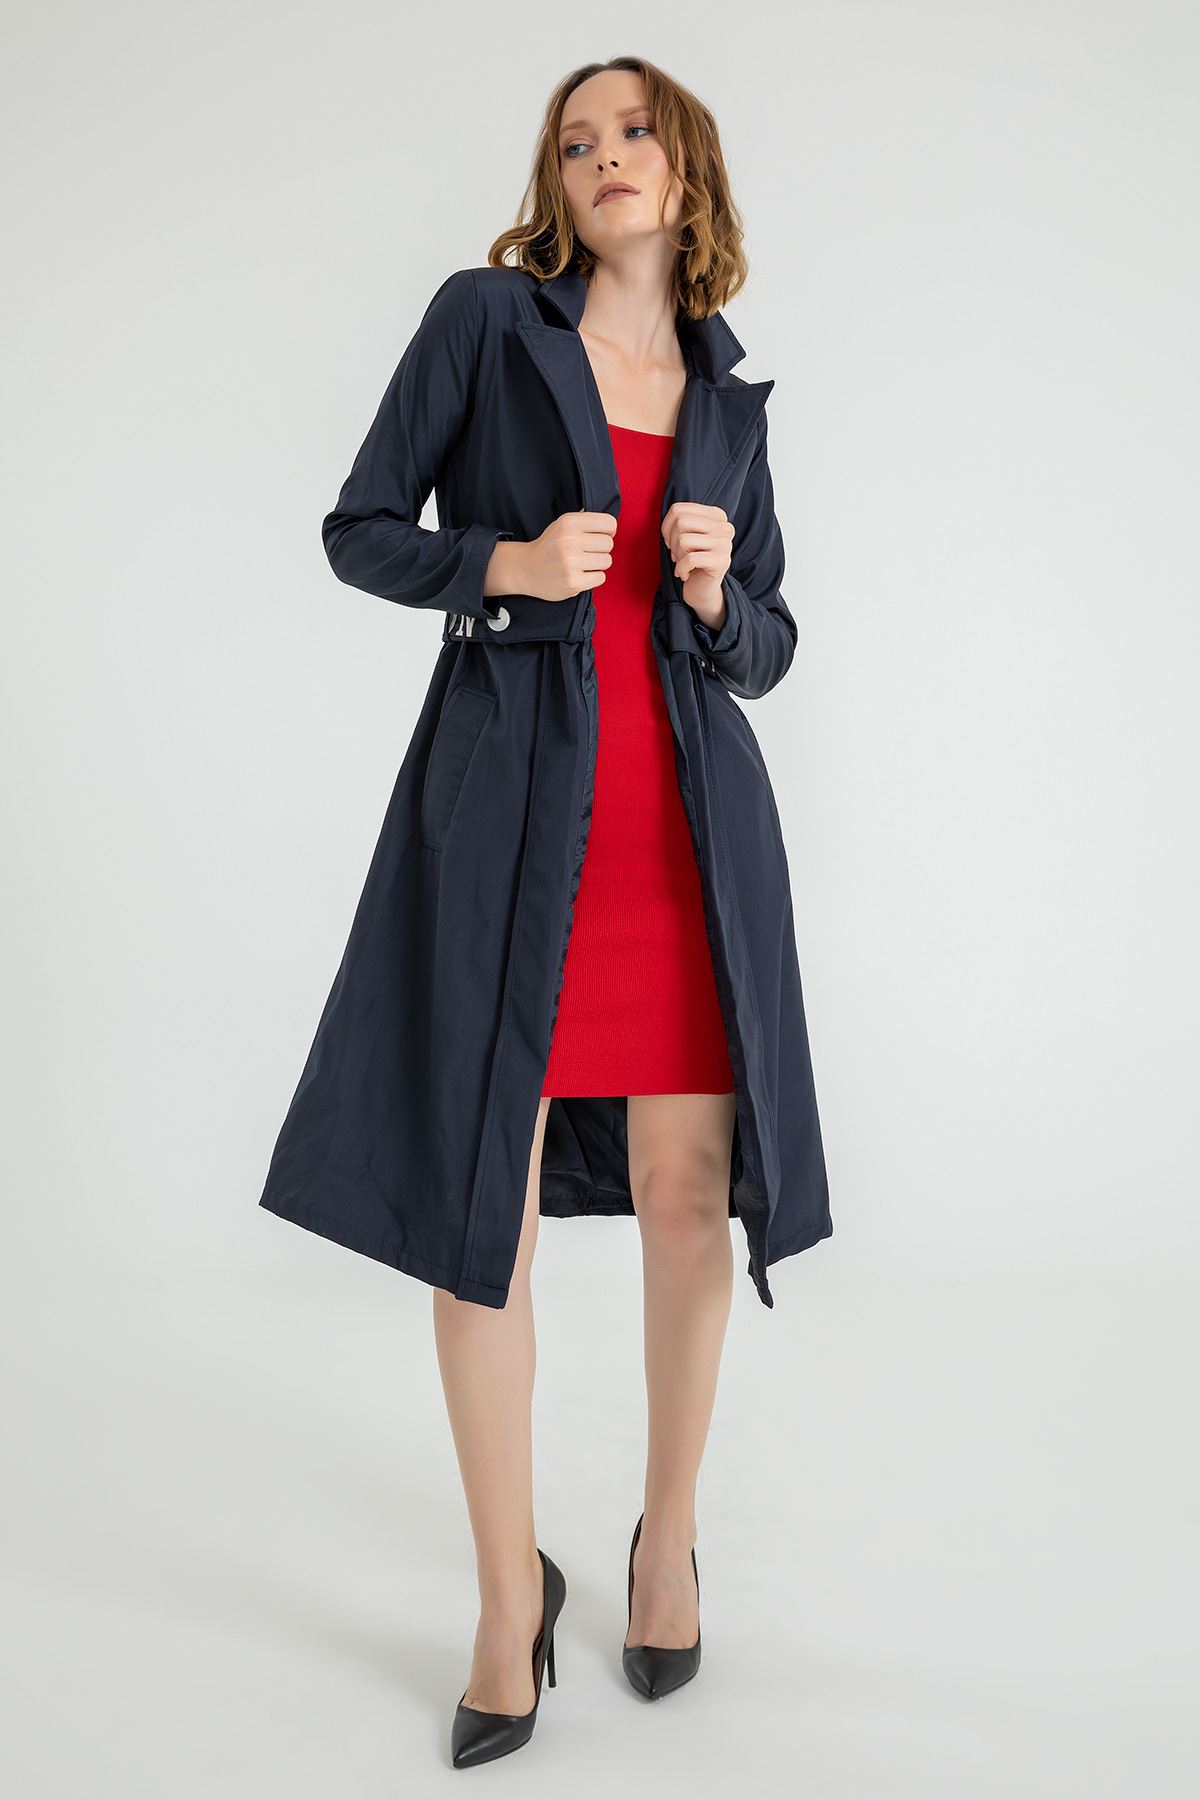 19K19276-03 أزياء معطف الخندق بالحزام -ازرق غامق - ازرق غامق